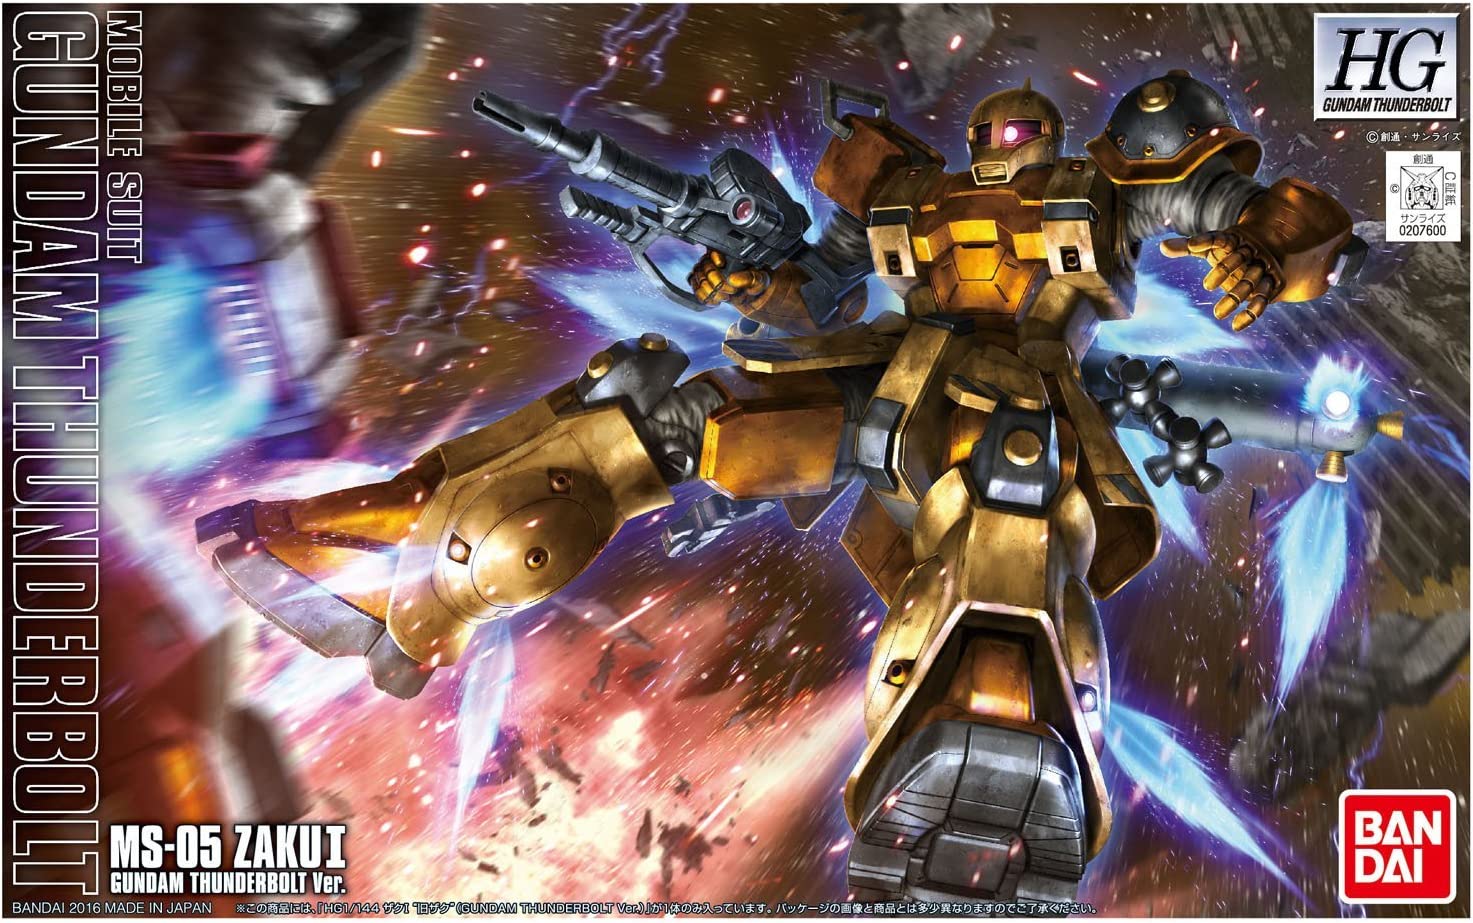 HG Mobile Suit Gundam Thunderbolt Zaku I "Old Zaku" (GUNDAM THUNDERBOLT Ver.) 1/144 Scale